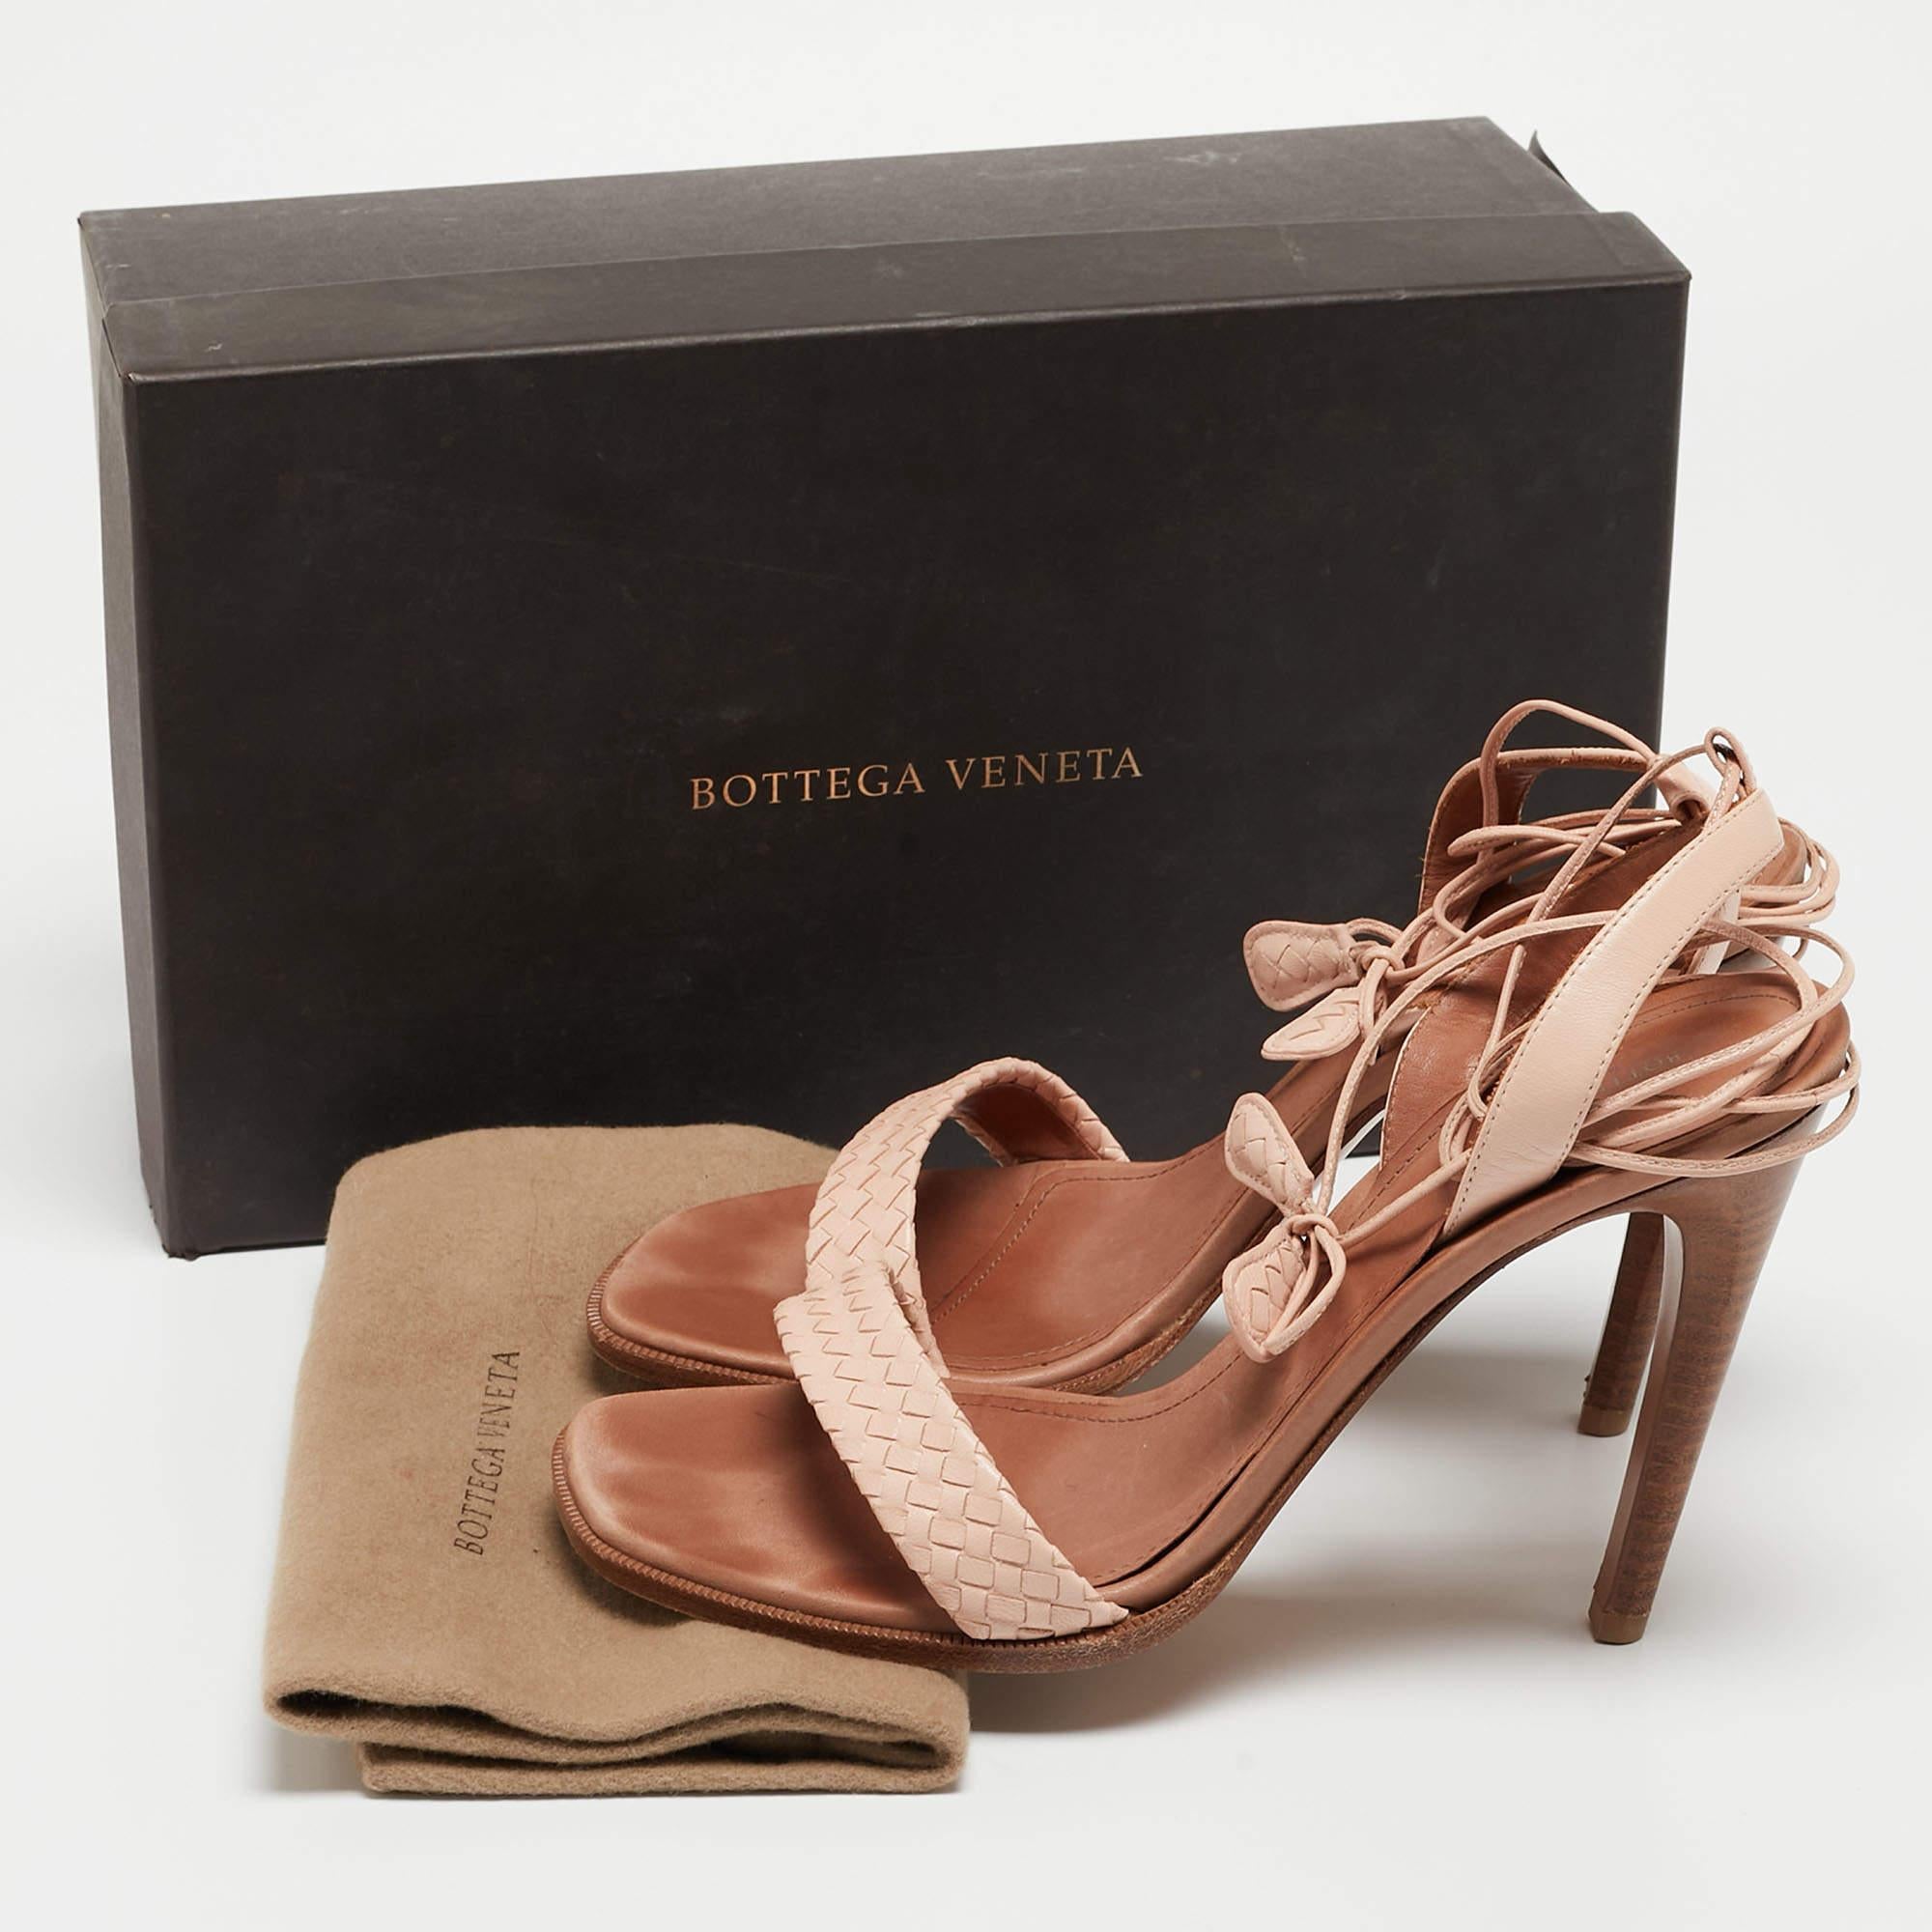 Bottega Veneta Light Pink Leather Ankle Tie Sandals Size 38.5 5